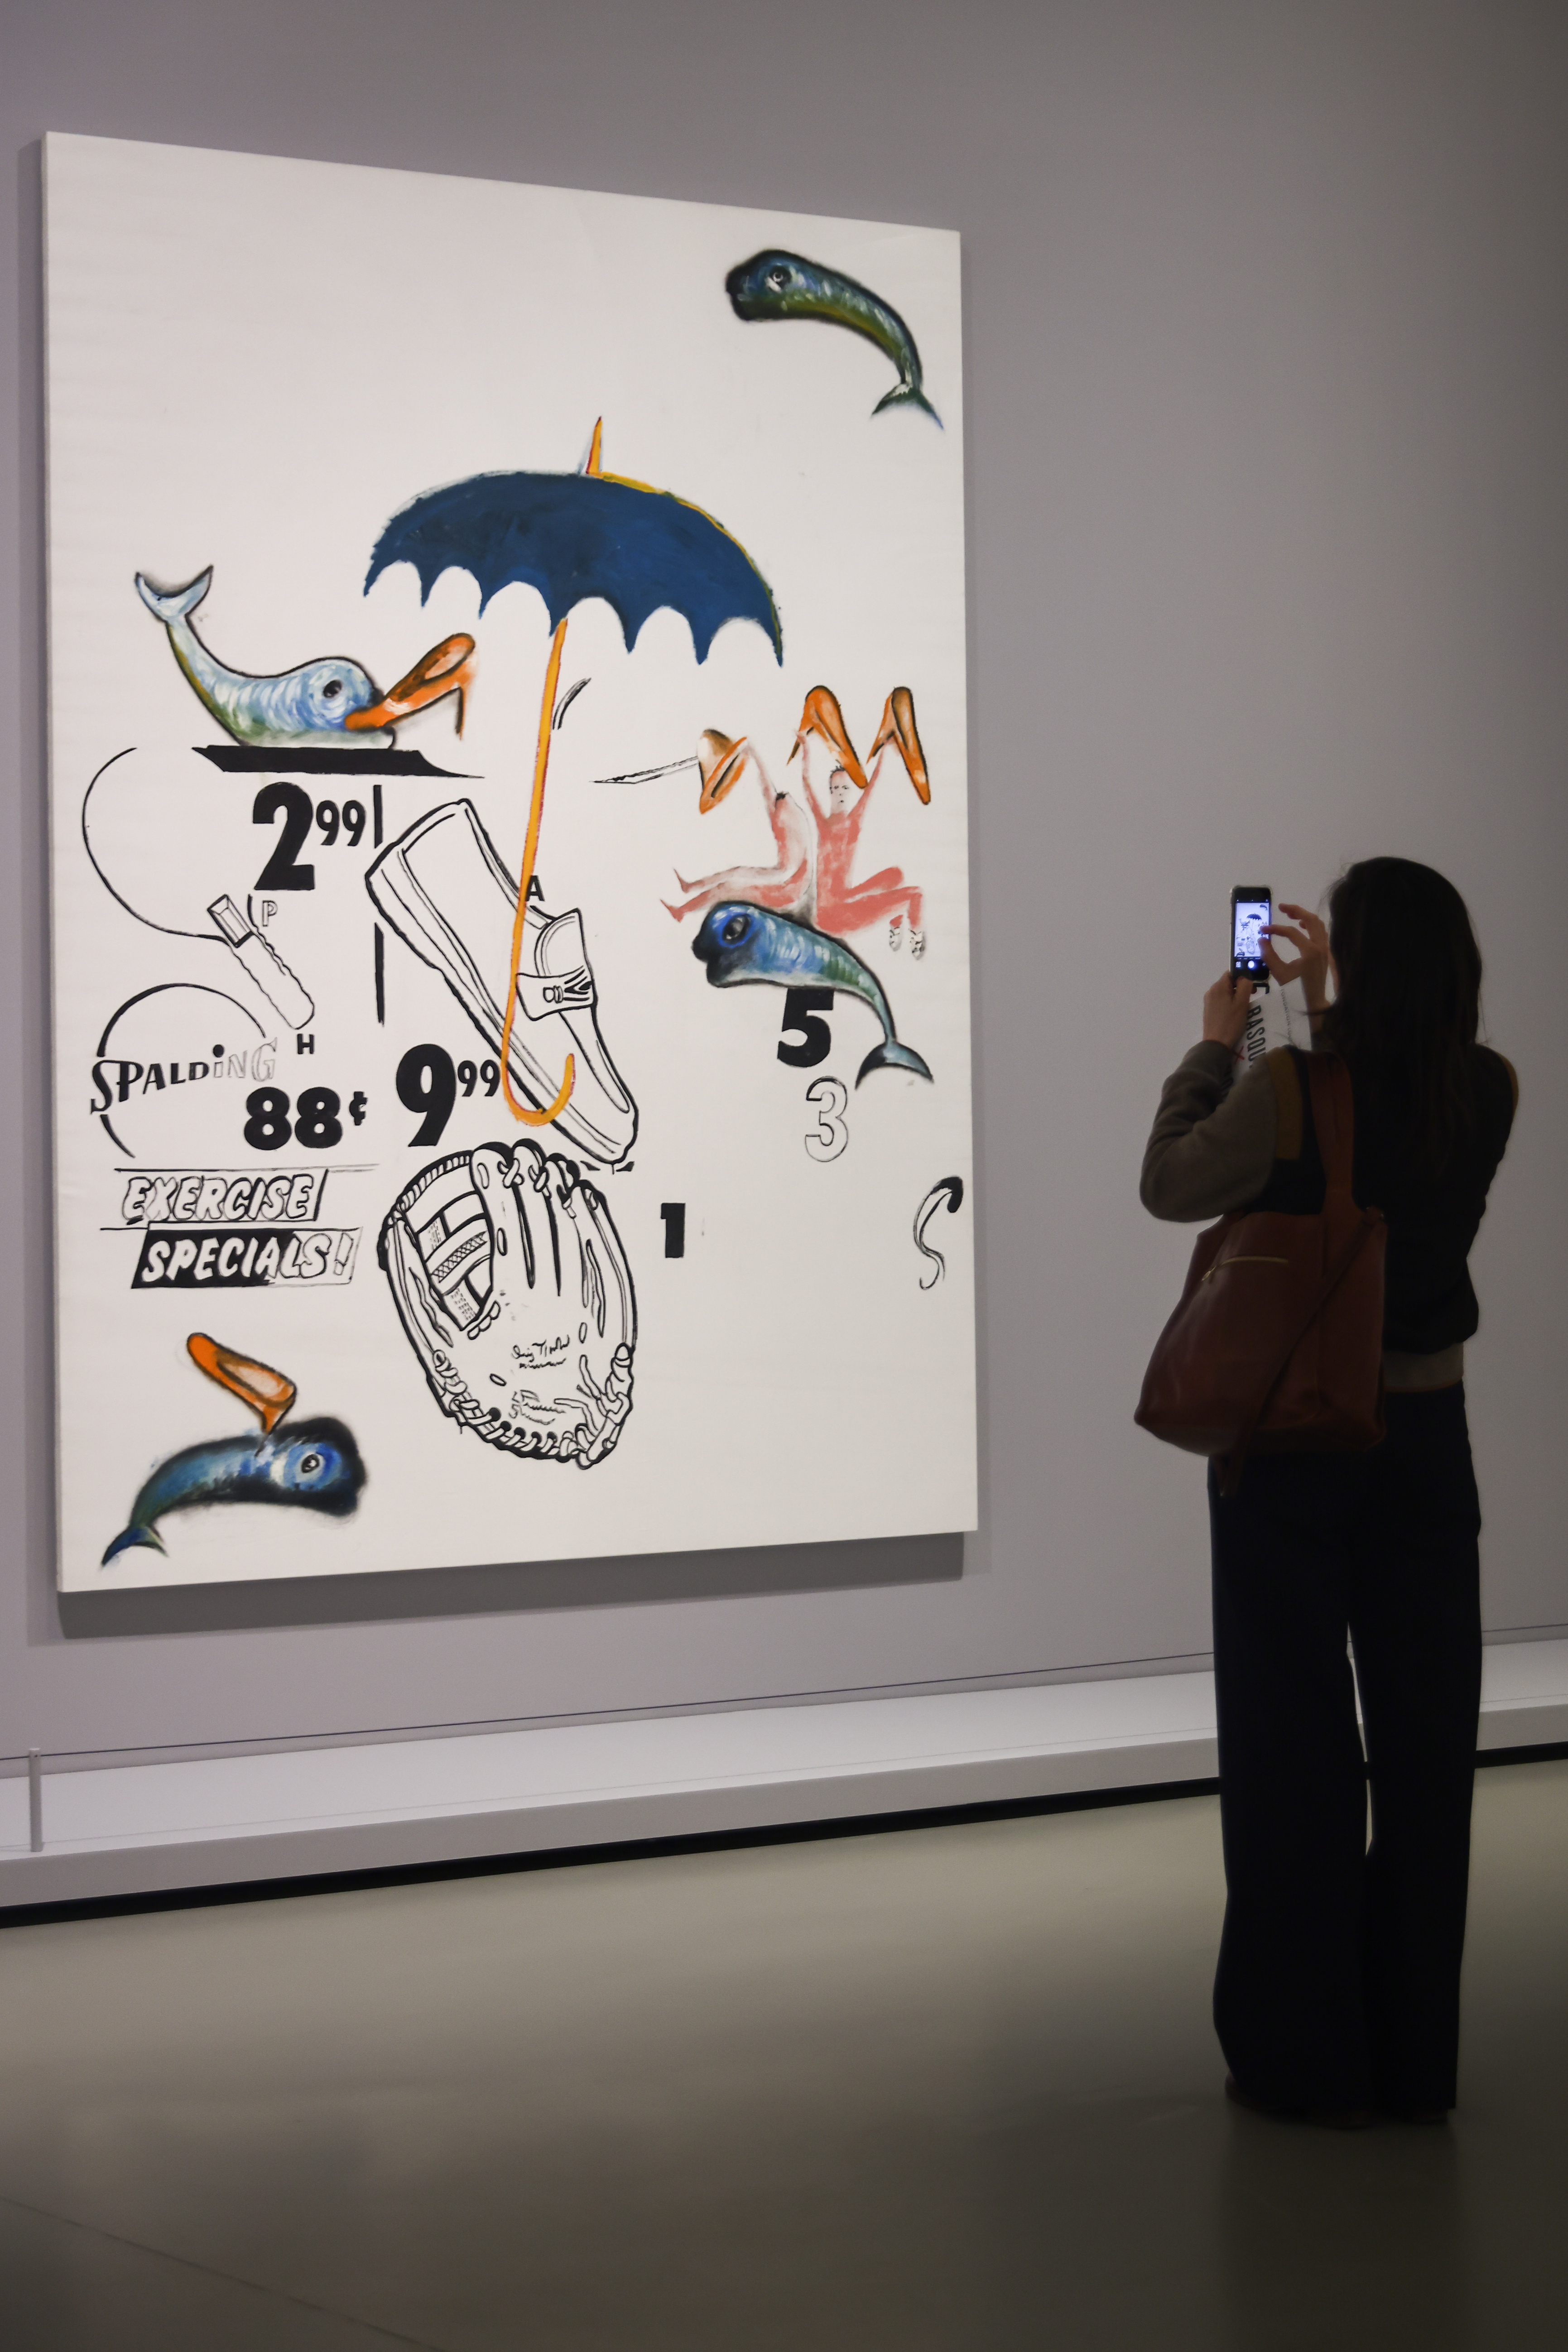 Basquiat x Warhol exhibition at Fondation Louis Vuitton in Paris